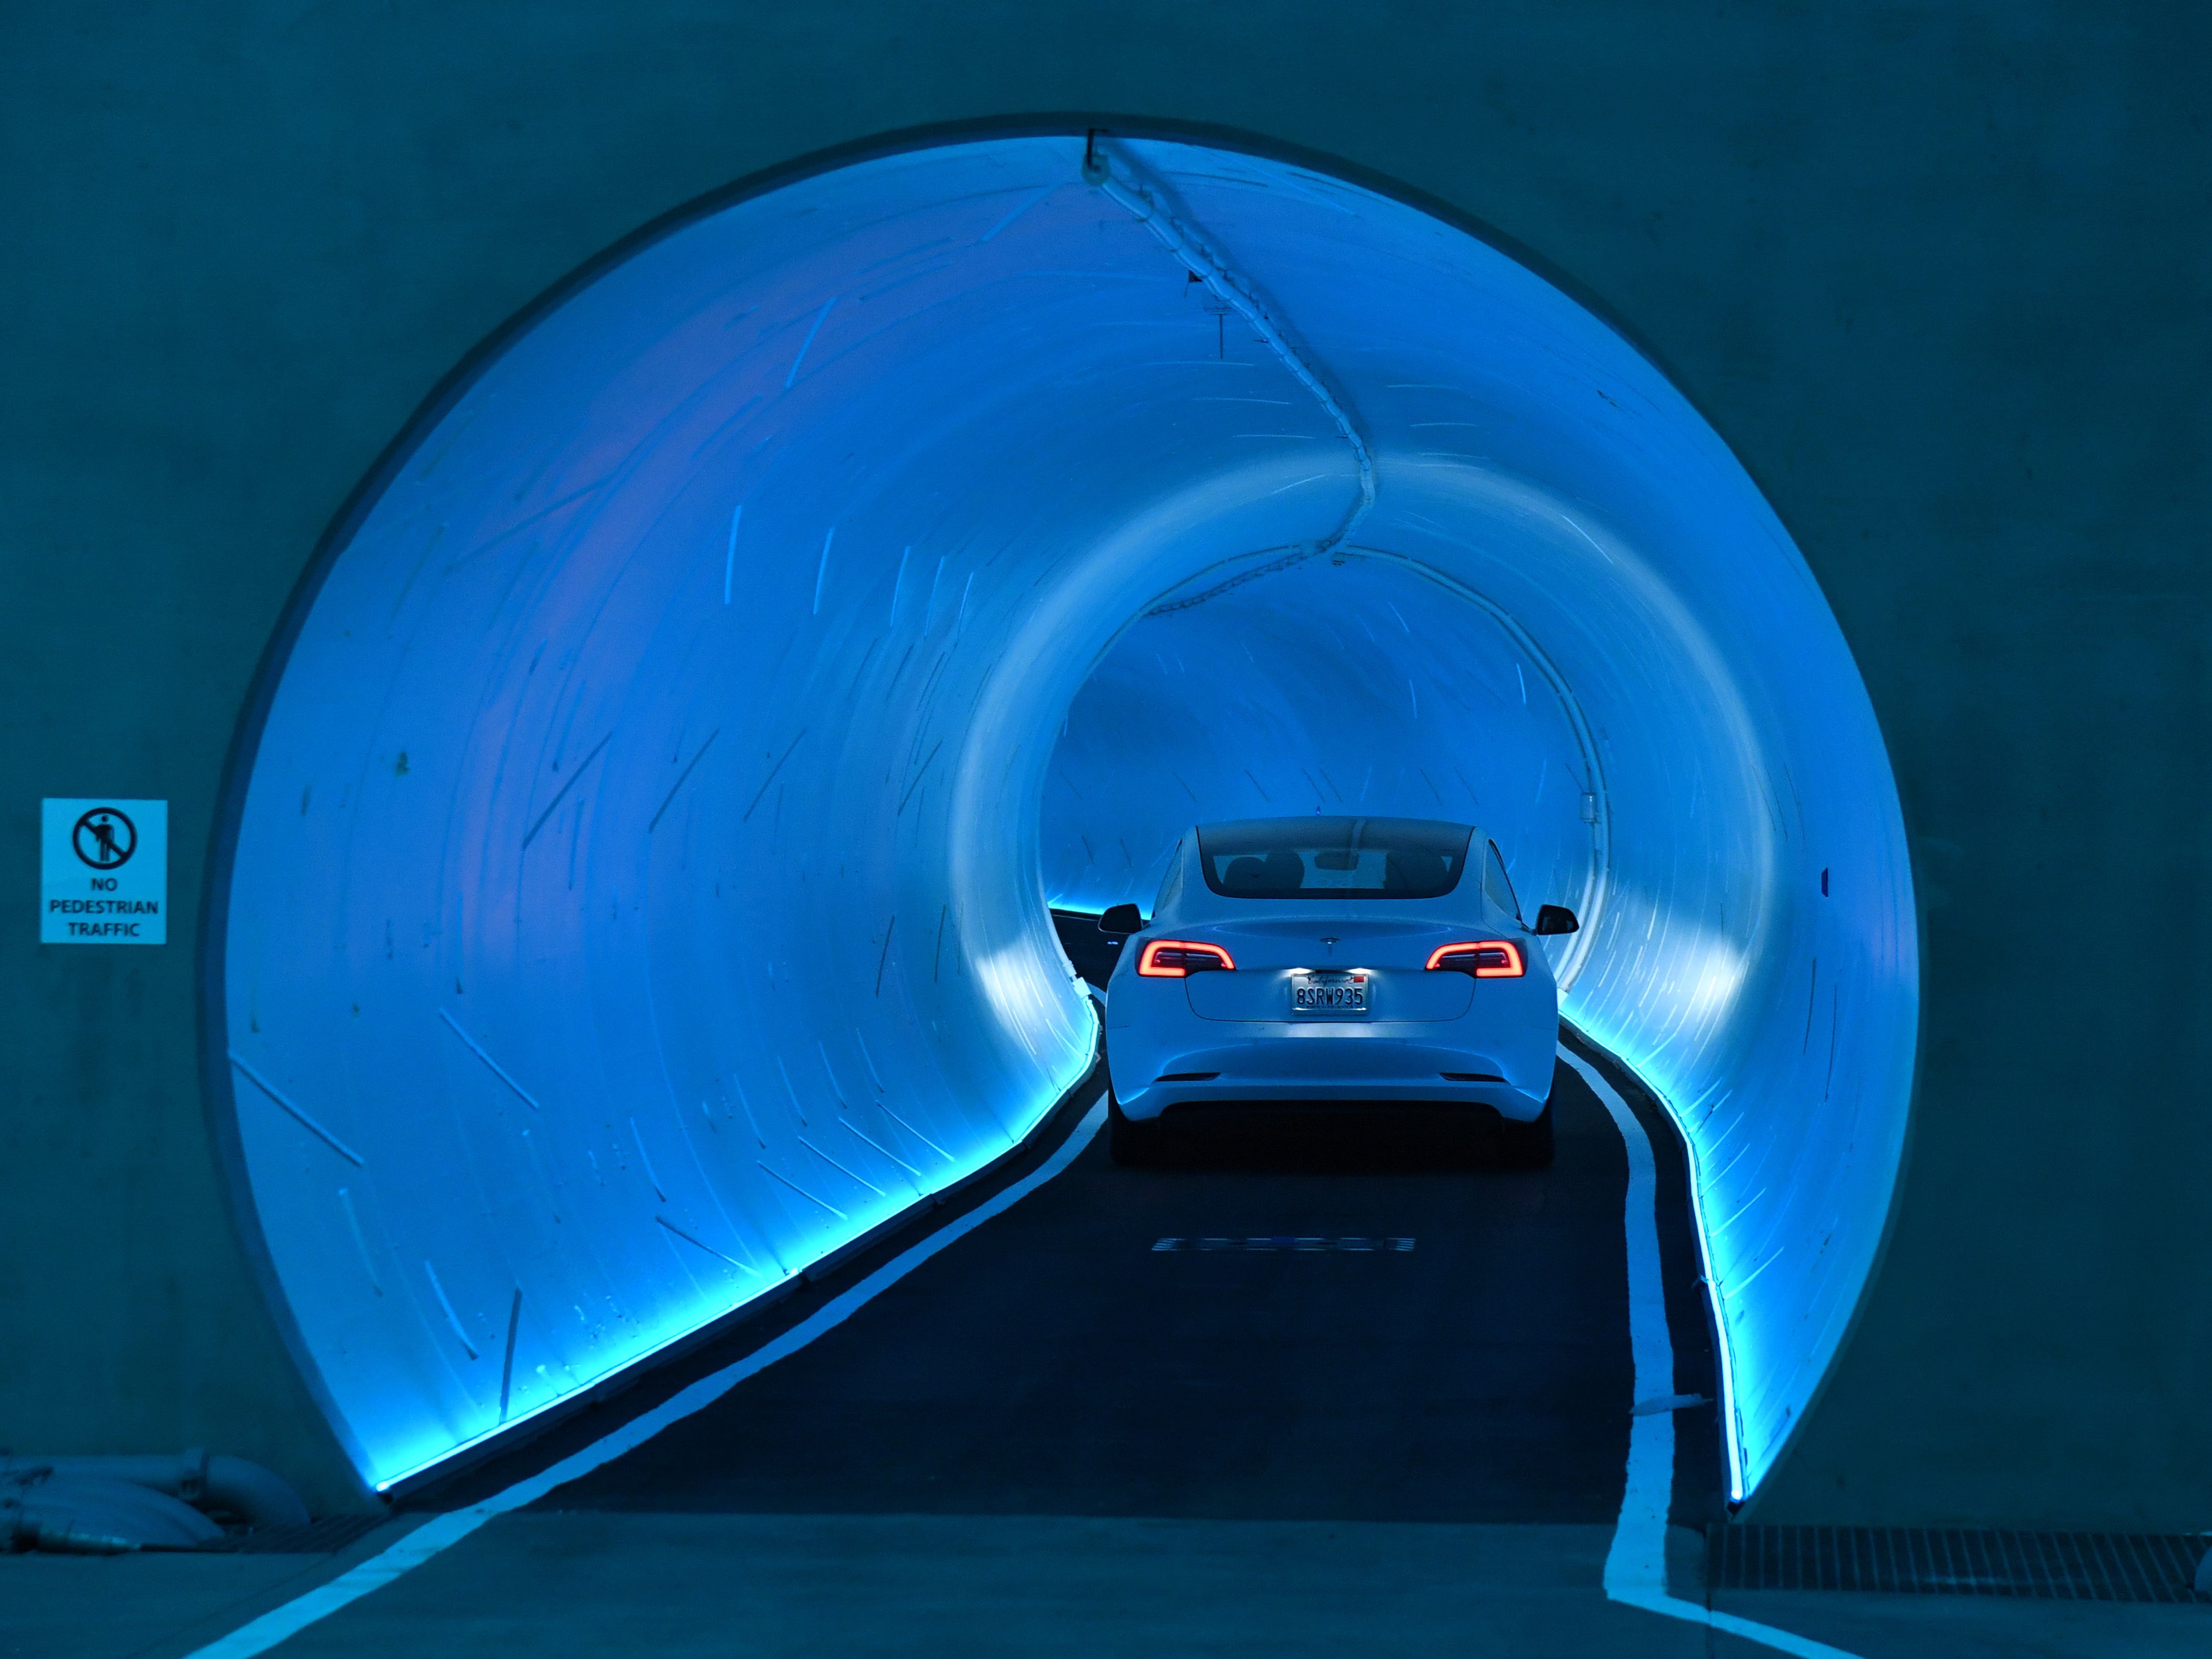 CES crowds zip underground via Boring's LVCC Loop tunnel